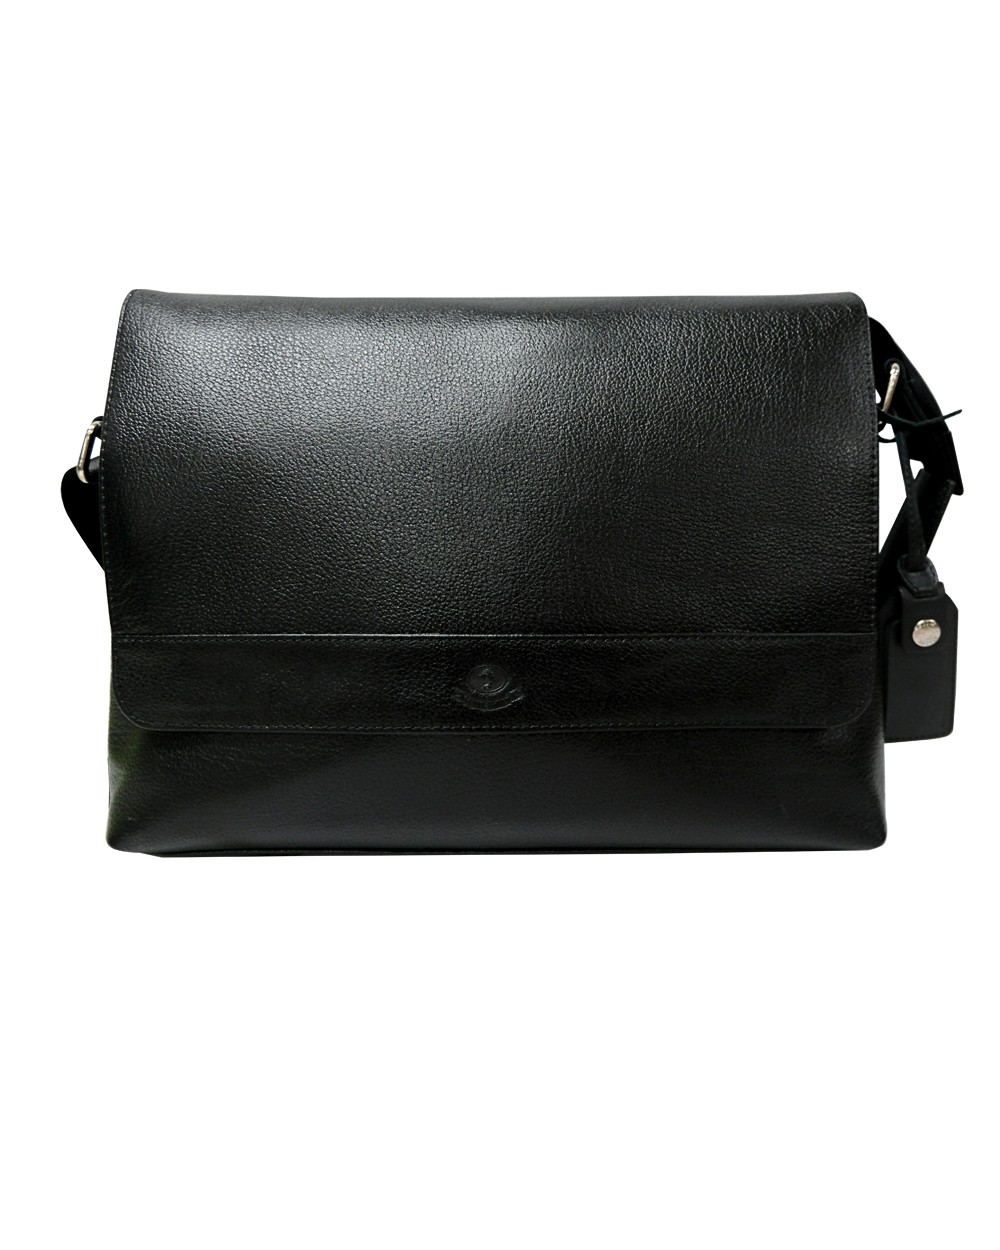 Cobe-Messenger Leather Bag (Big)